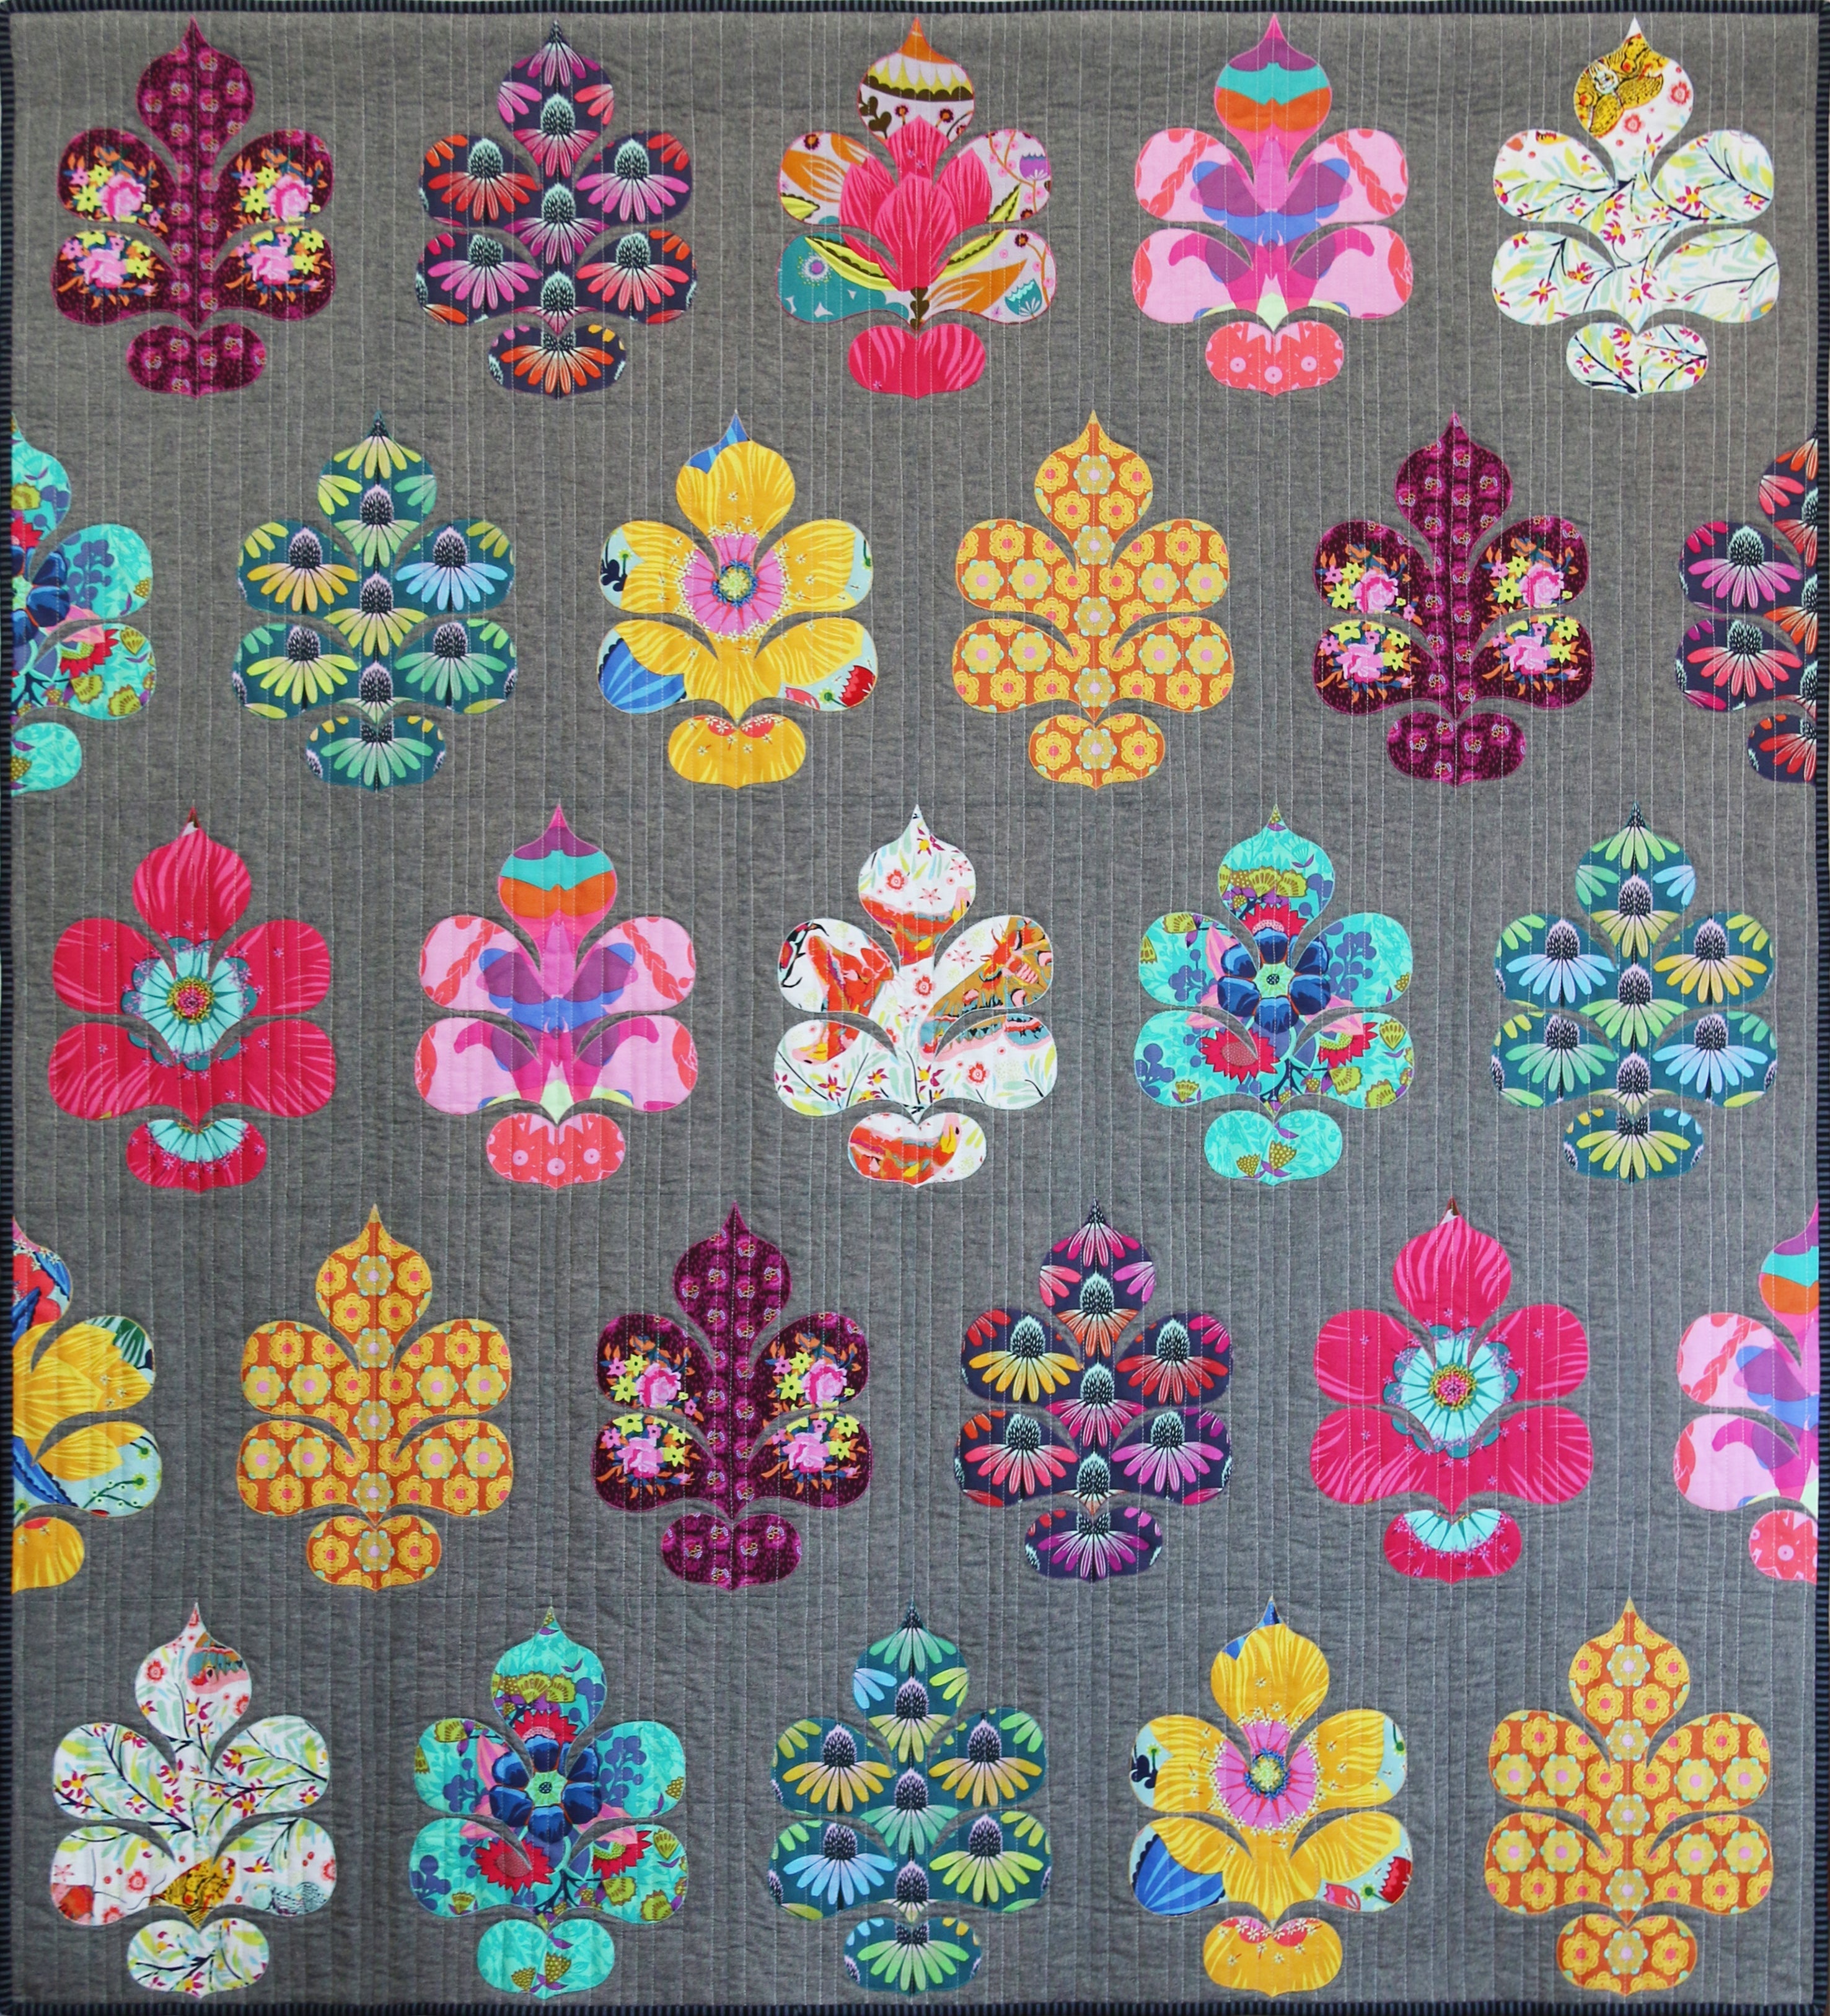 Thora Belle Quilt Pattern - PDF